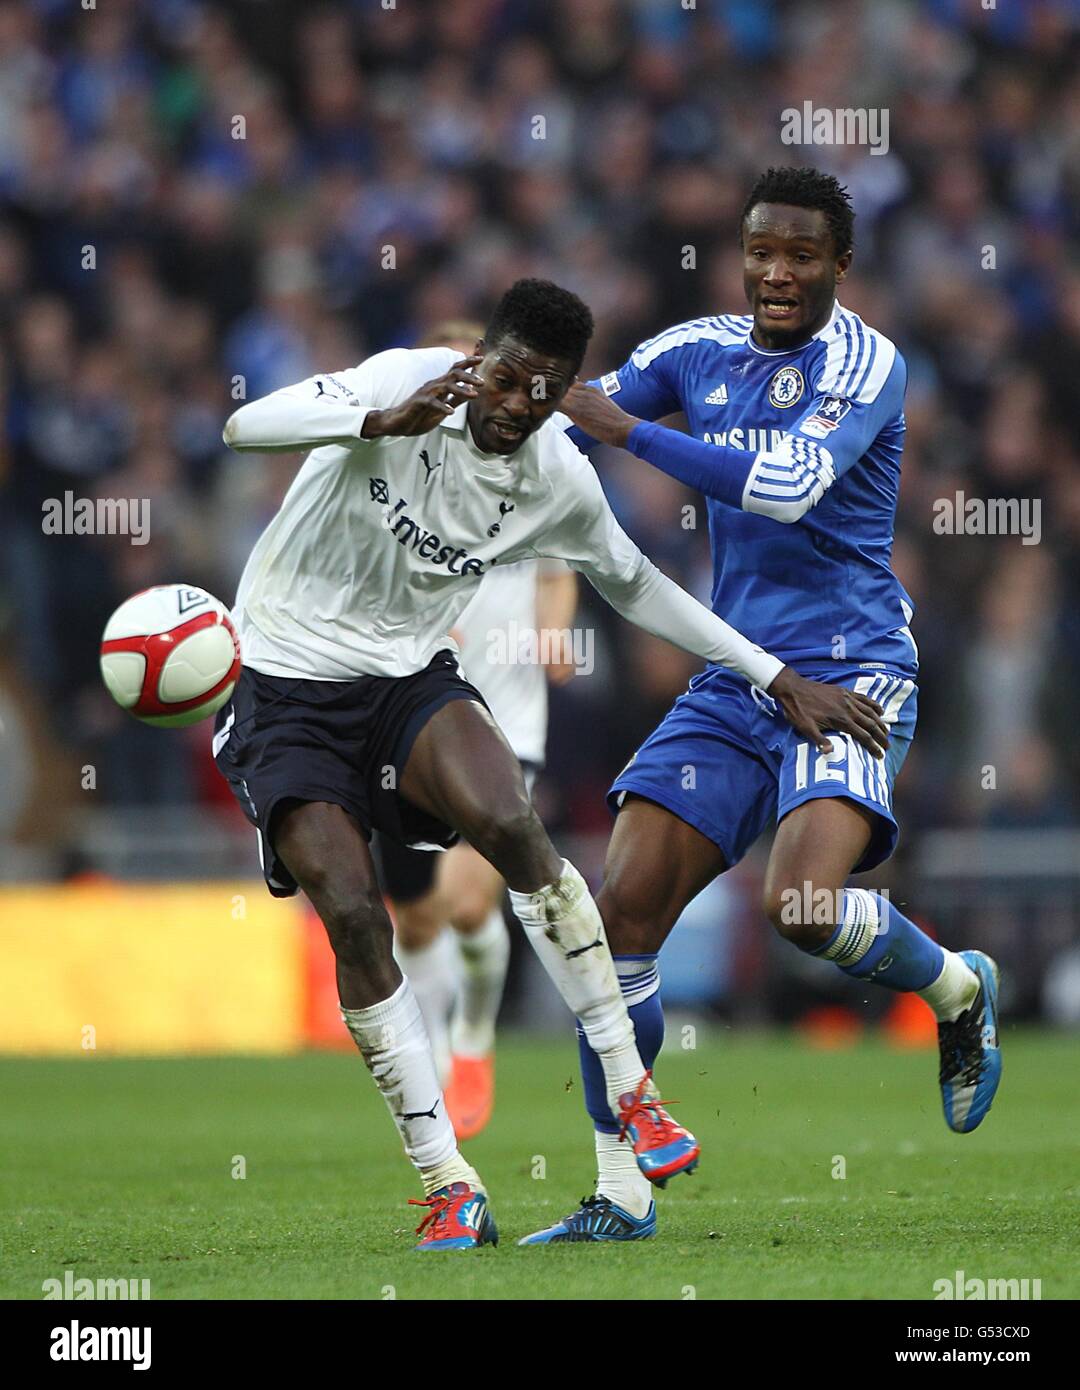 Fußball - FA Cup - Halbfinale - Tottenham Hotspur gegen Chelsea - Wembley Stadium. Tottenham Hotspur's Emmanuel Adebayor (links) und Chelsea's Jon Obi Mikel (rechts) kämpfen um den Ball Stockfoto